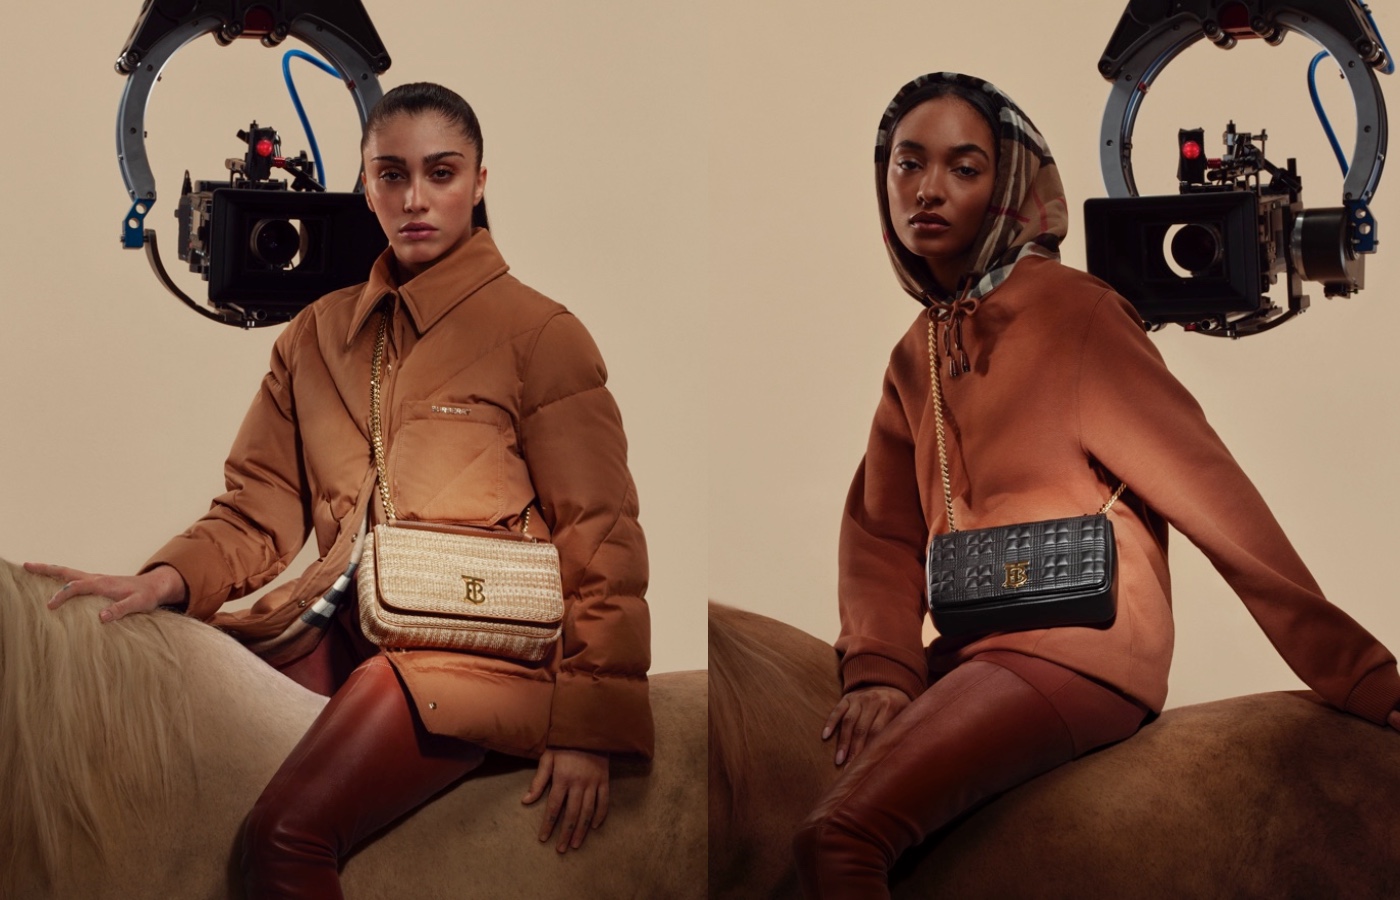 The million-dollar supermodels shine in the burberry fashion house's iconic lola handbag campaign